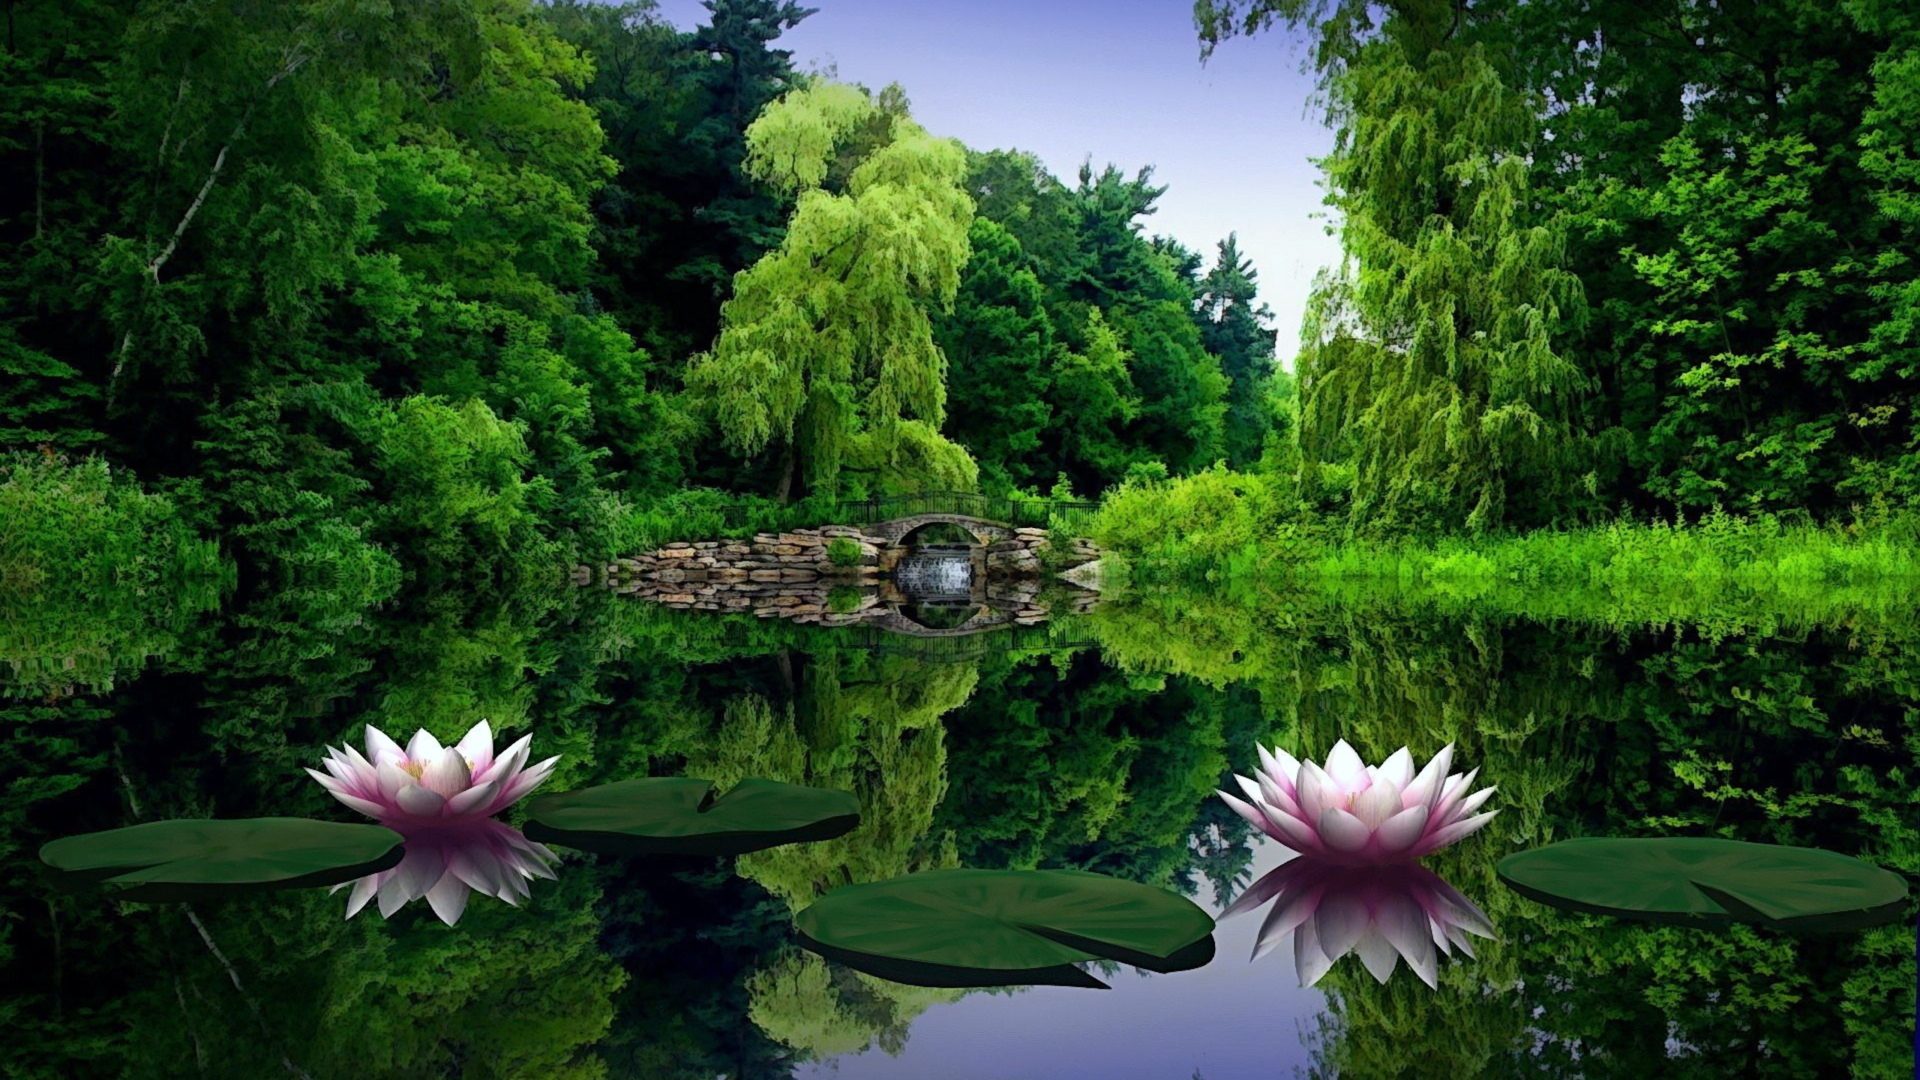 Spring Chinese Garden Free Desktop Wallpaper 2560x1600, Wallpaper13.com